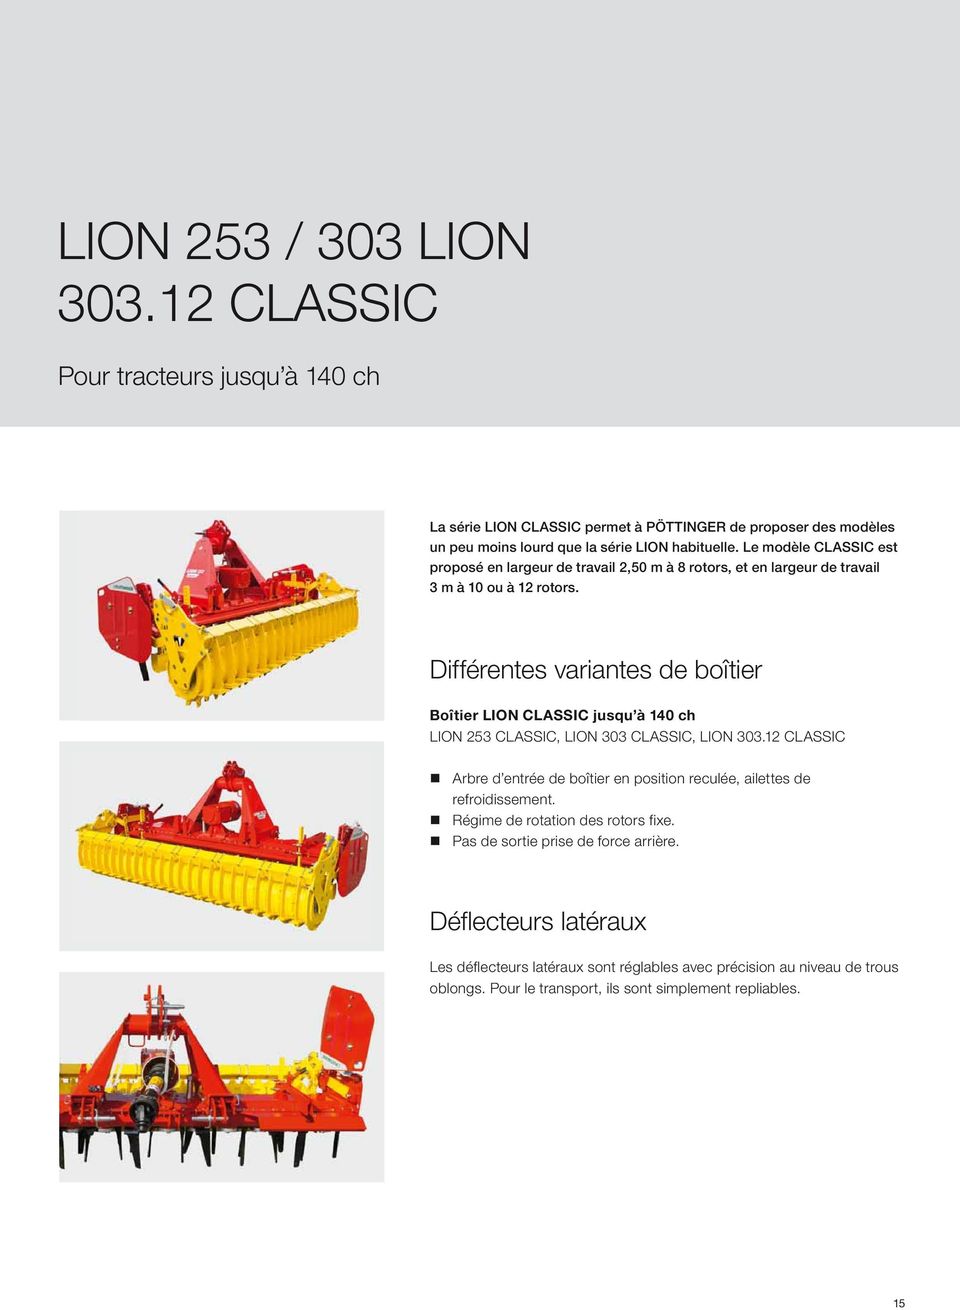 Différentes variantes de boîtier Boîtier LION CLASSIC jusqu à 140 ch LION 253 CLASSIC, LION 303 CLASSIC, LION 303.